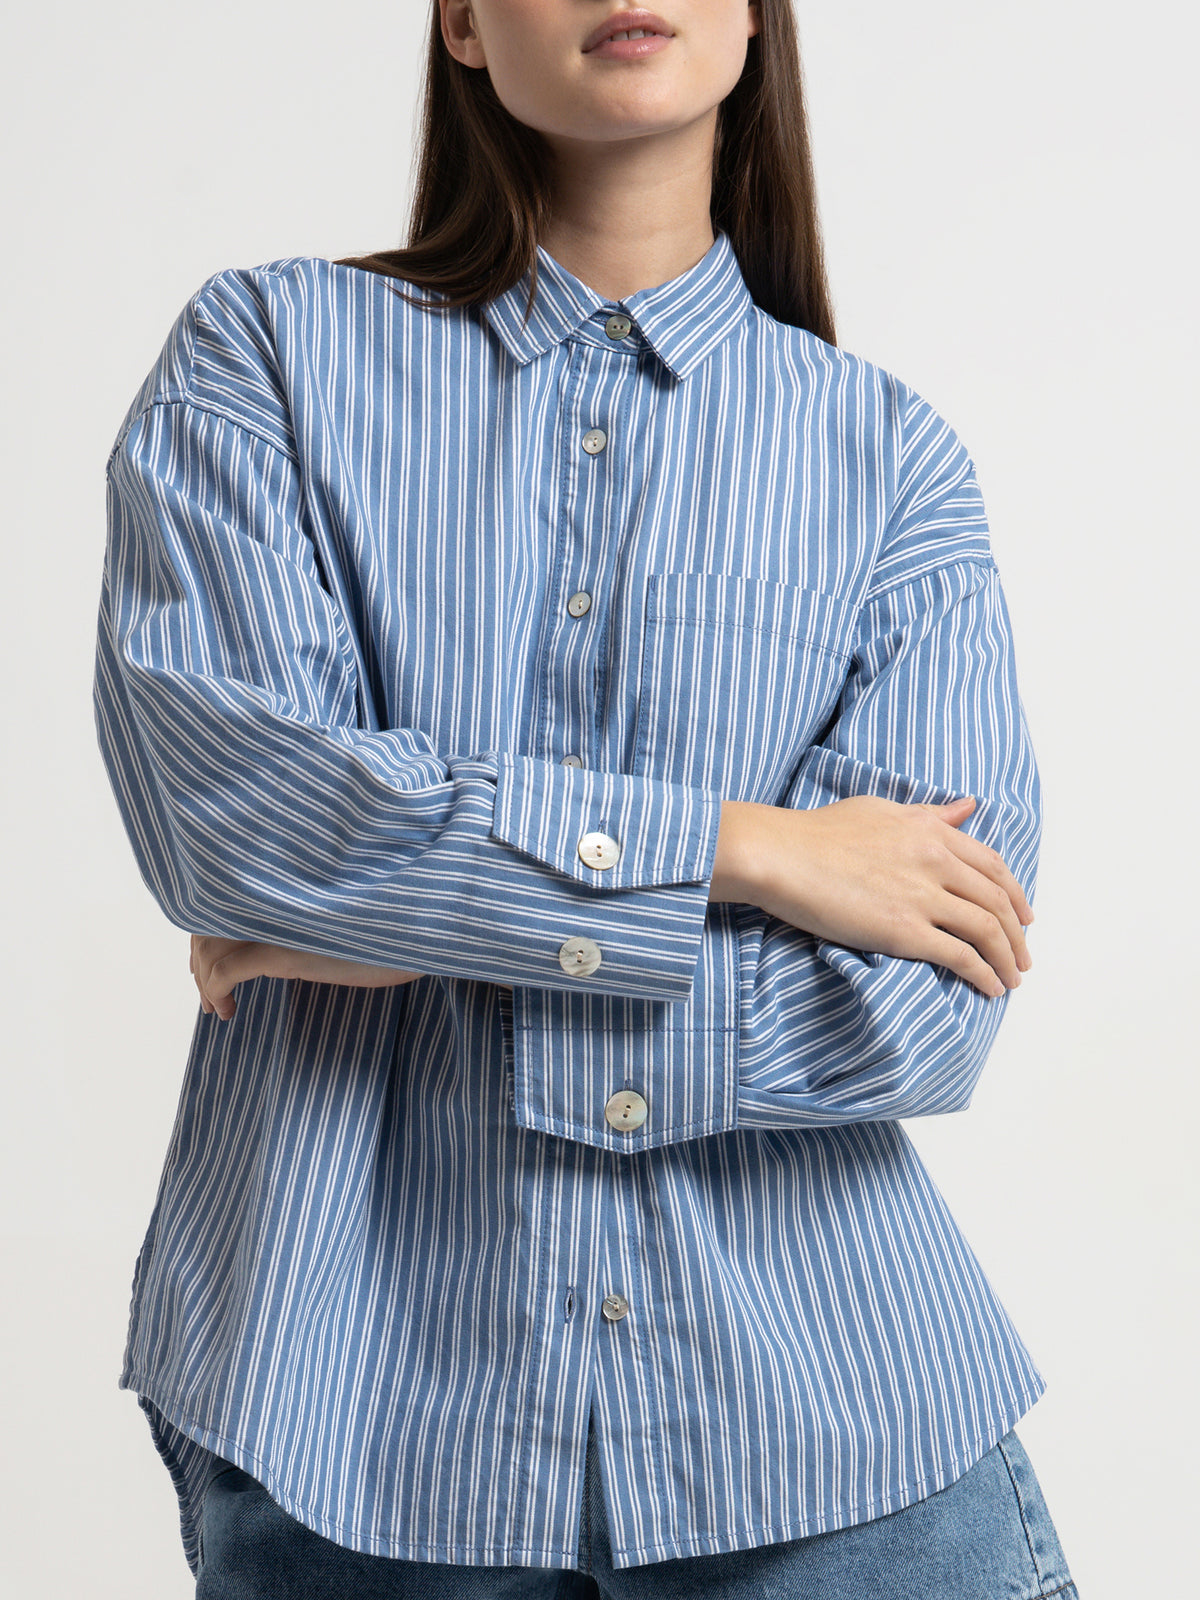 Sora Stripe Shirt in Blue Stripe